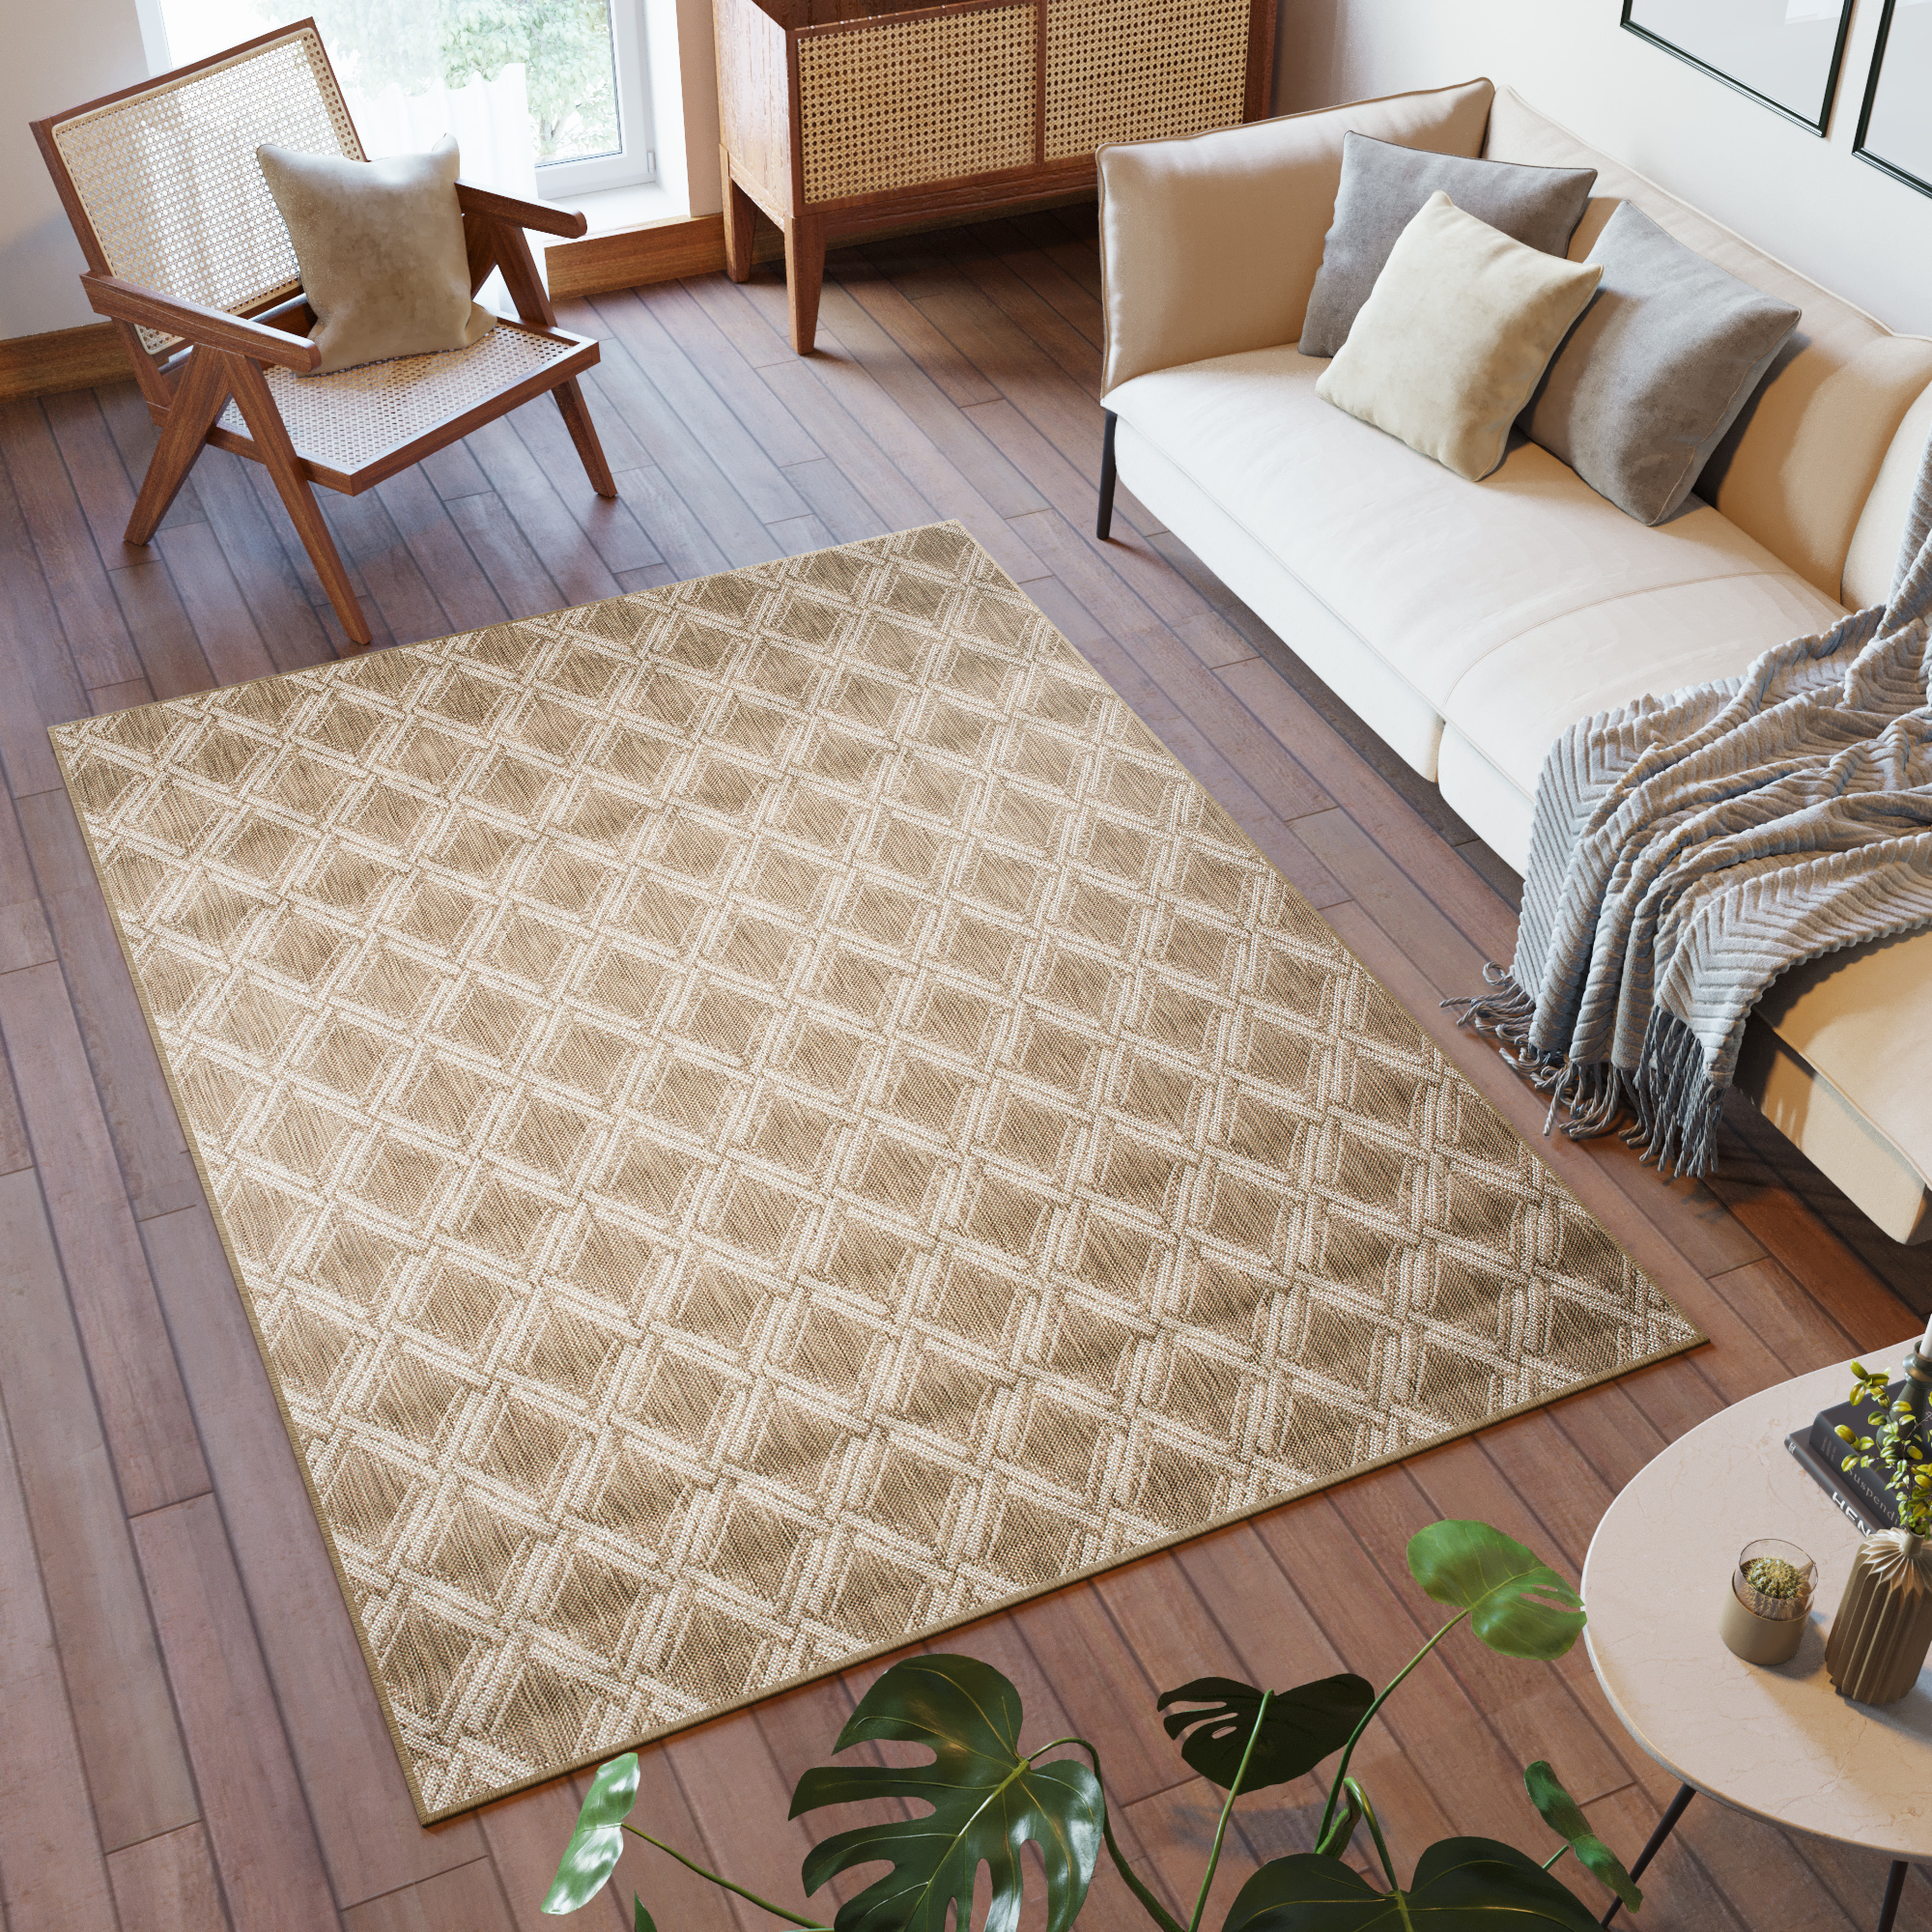 tappeto ingresso casa tappeti grandi dimensioni 300x400 Tappeto da